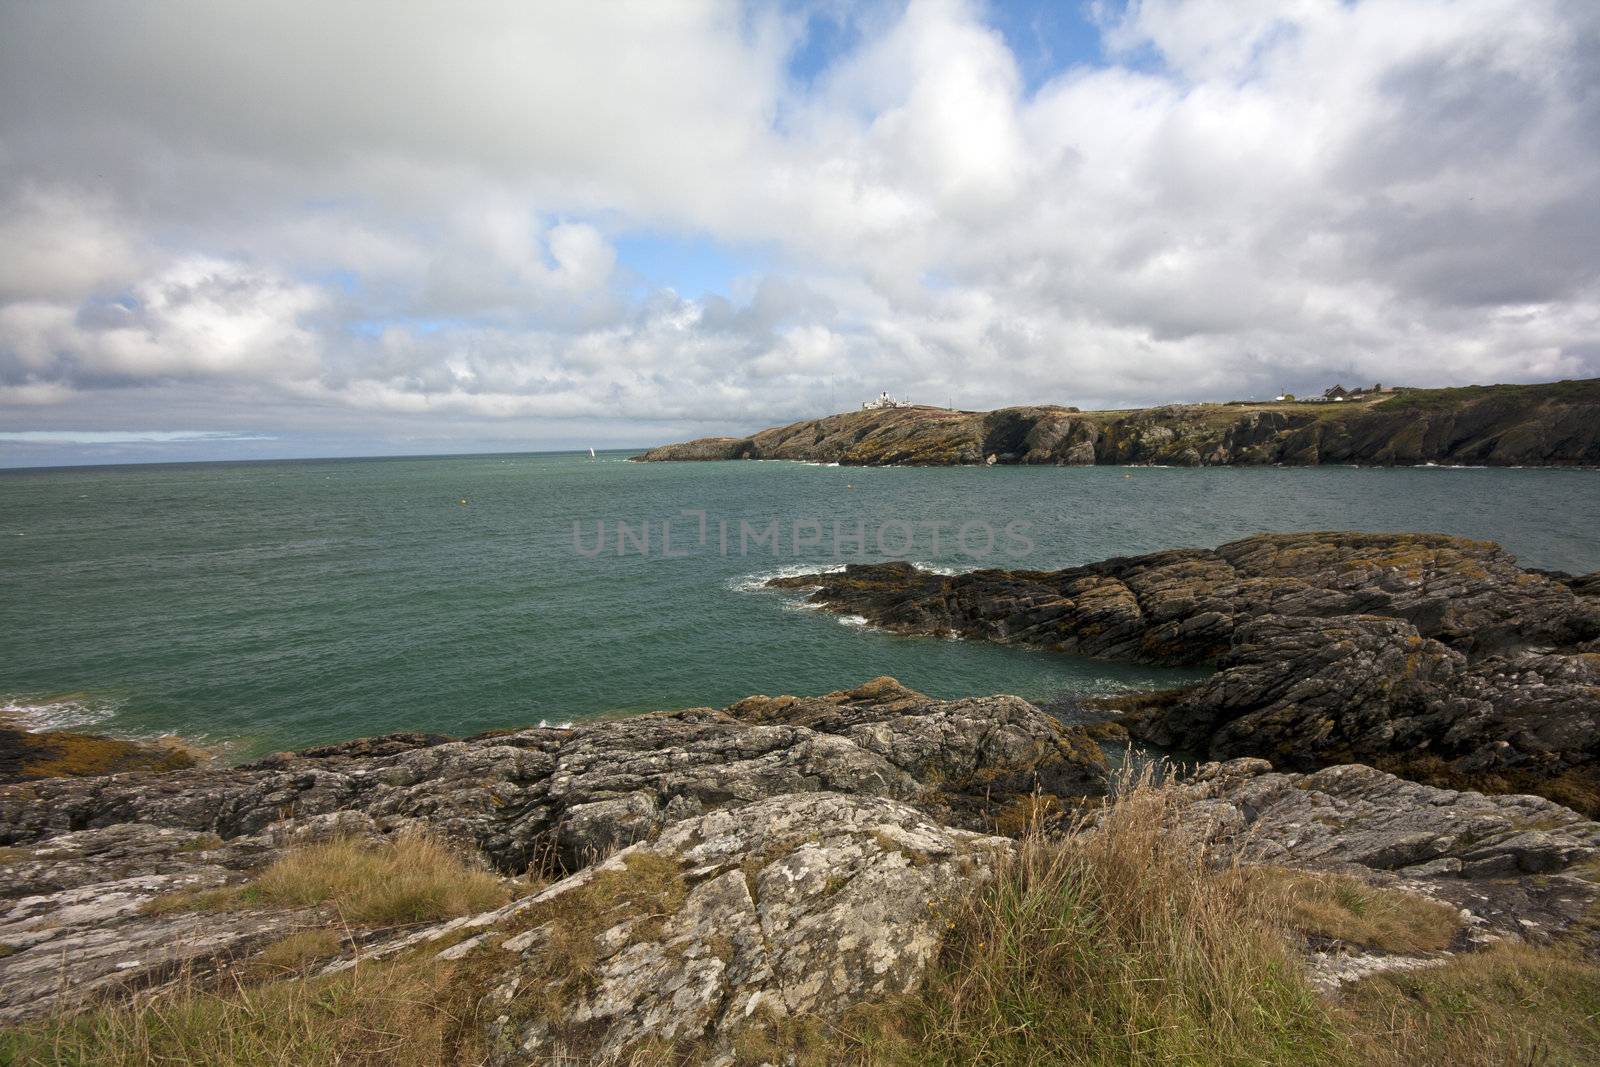 The North Sea Anglesey Coast